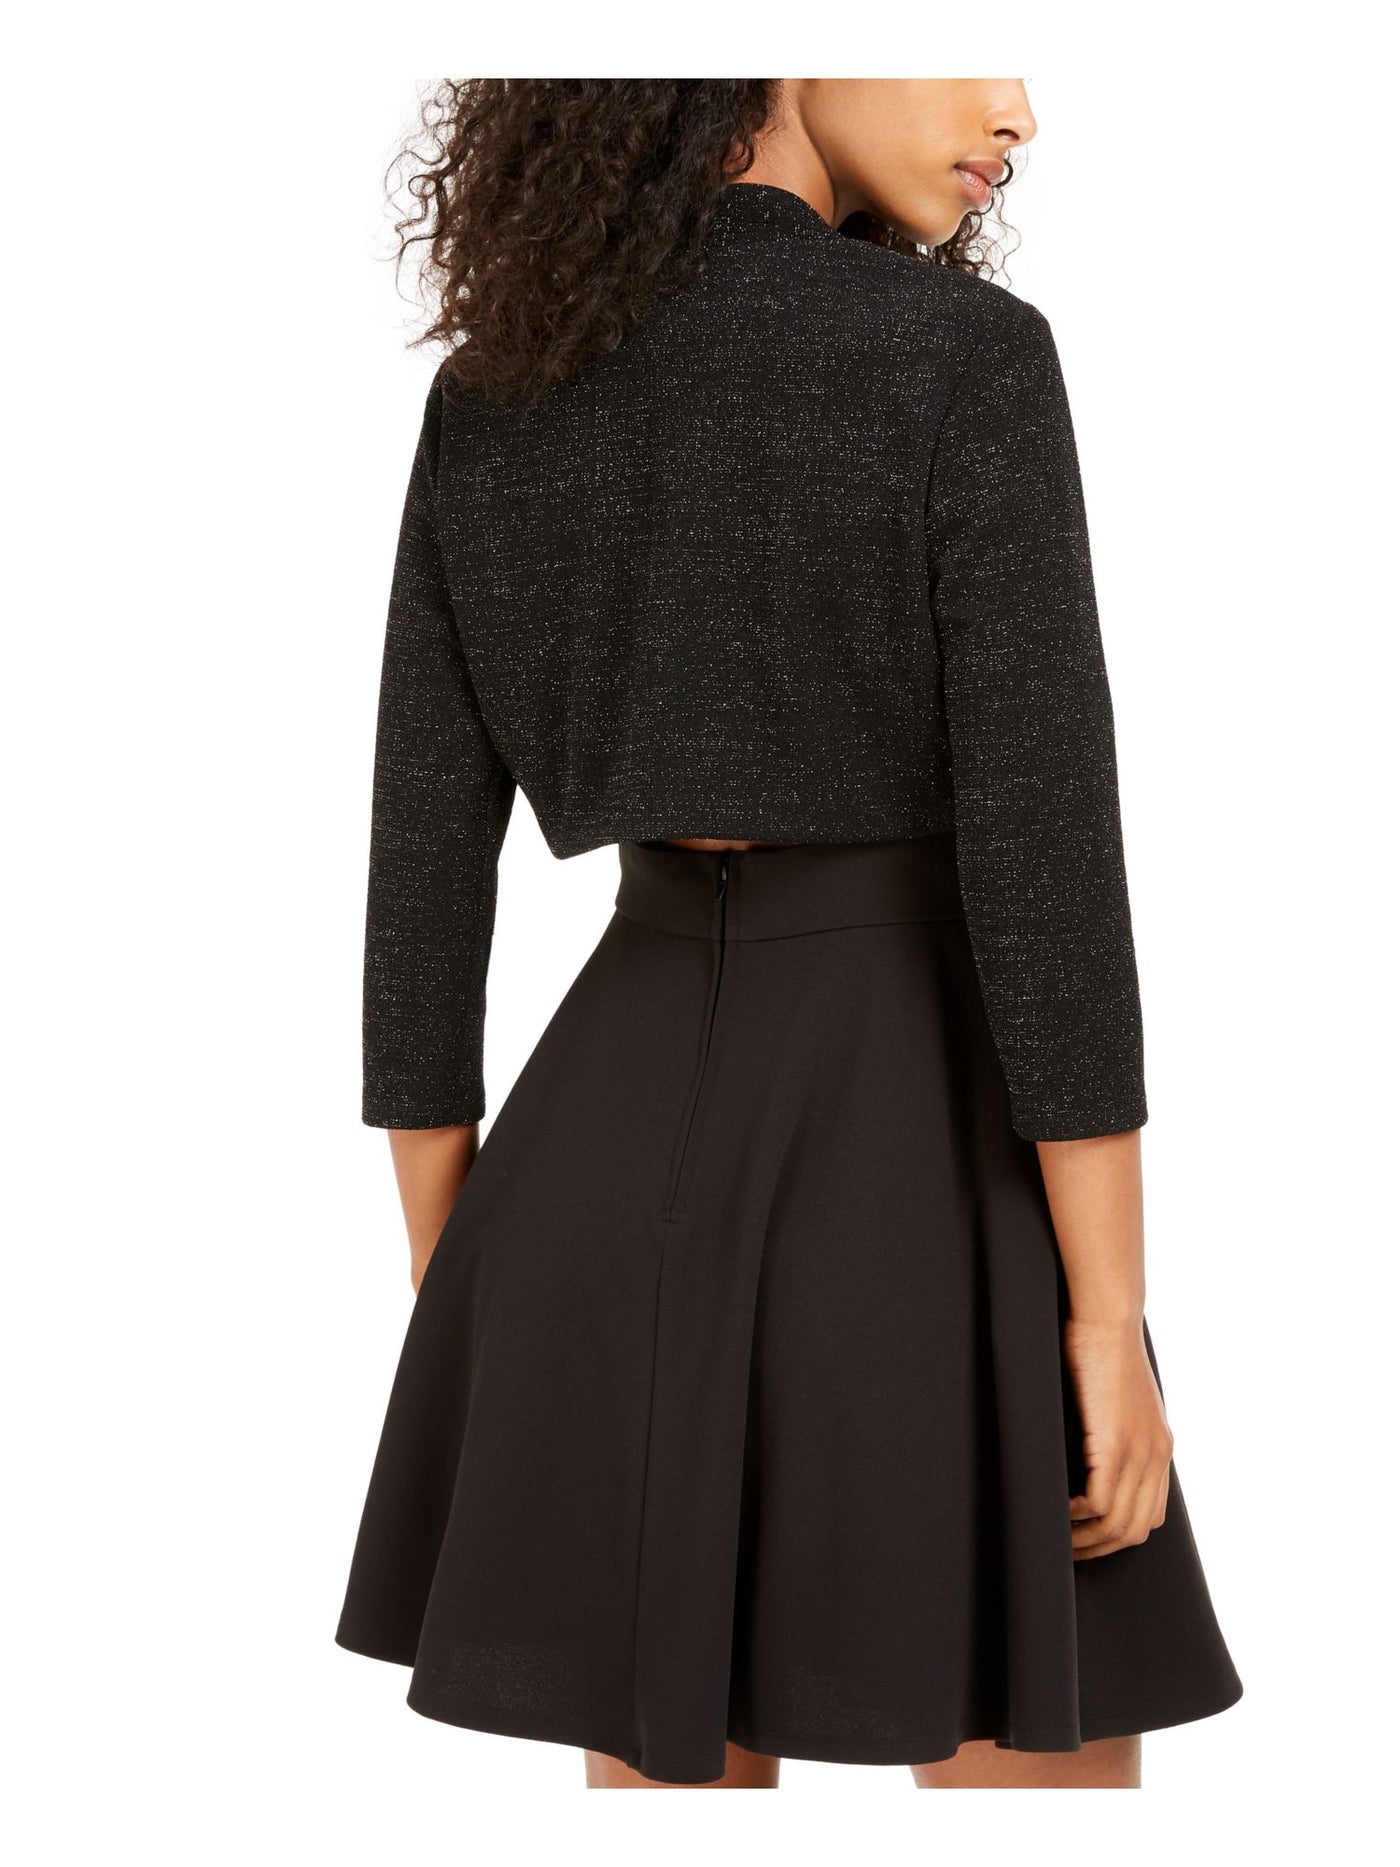 CITY STUDIO Womens Black Shrug Speckle Long Sleeve Open Cardigan Sweater Juniors XS